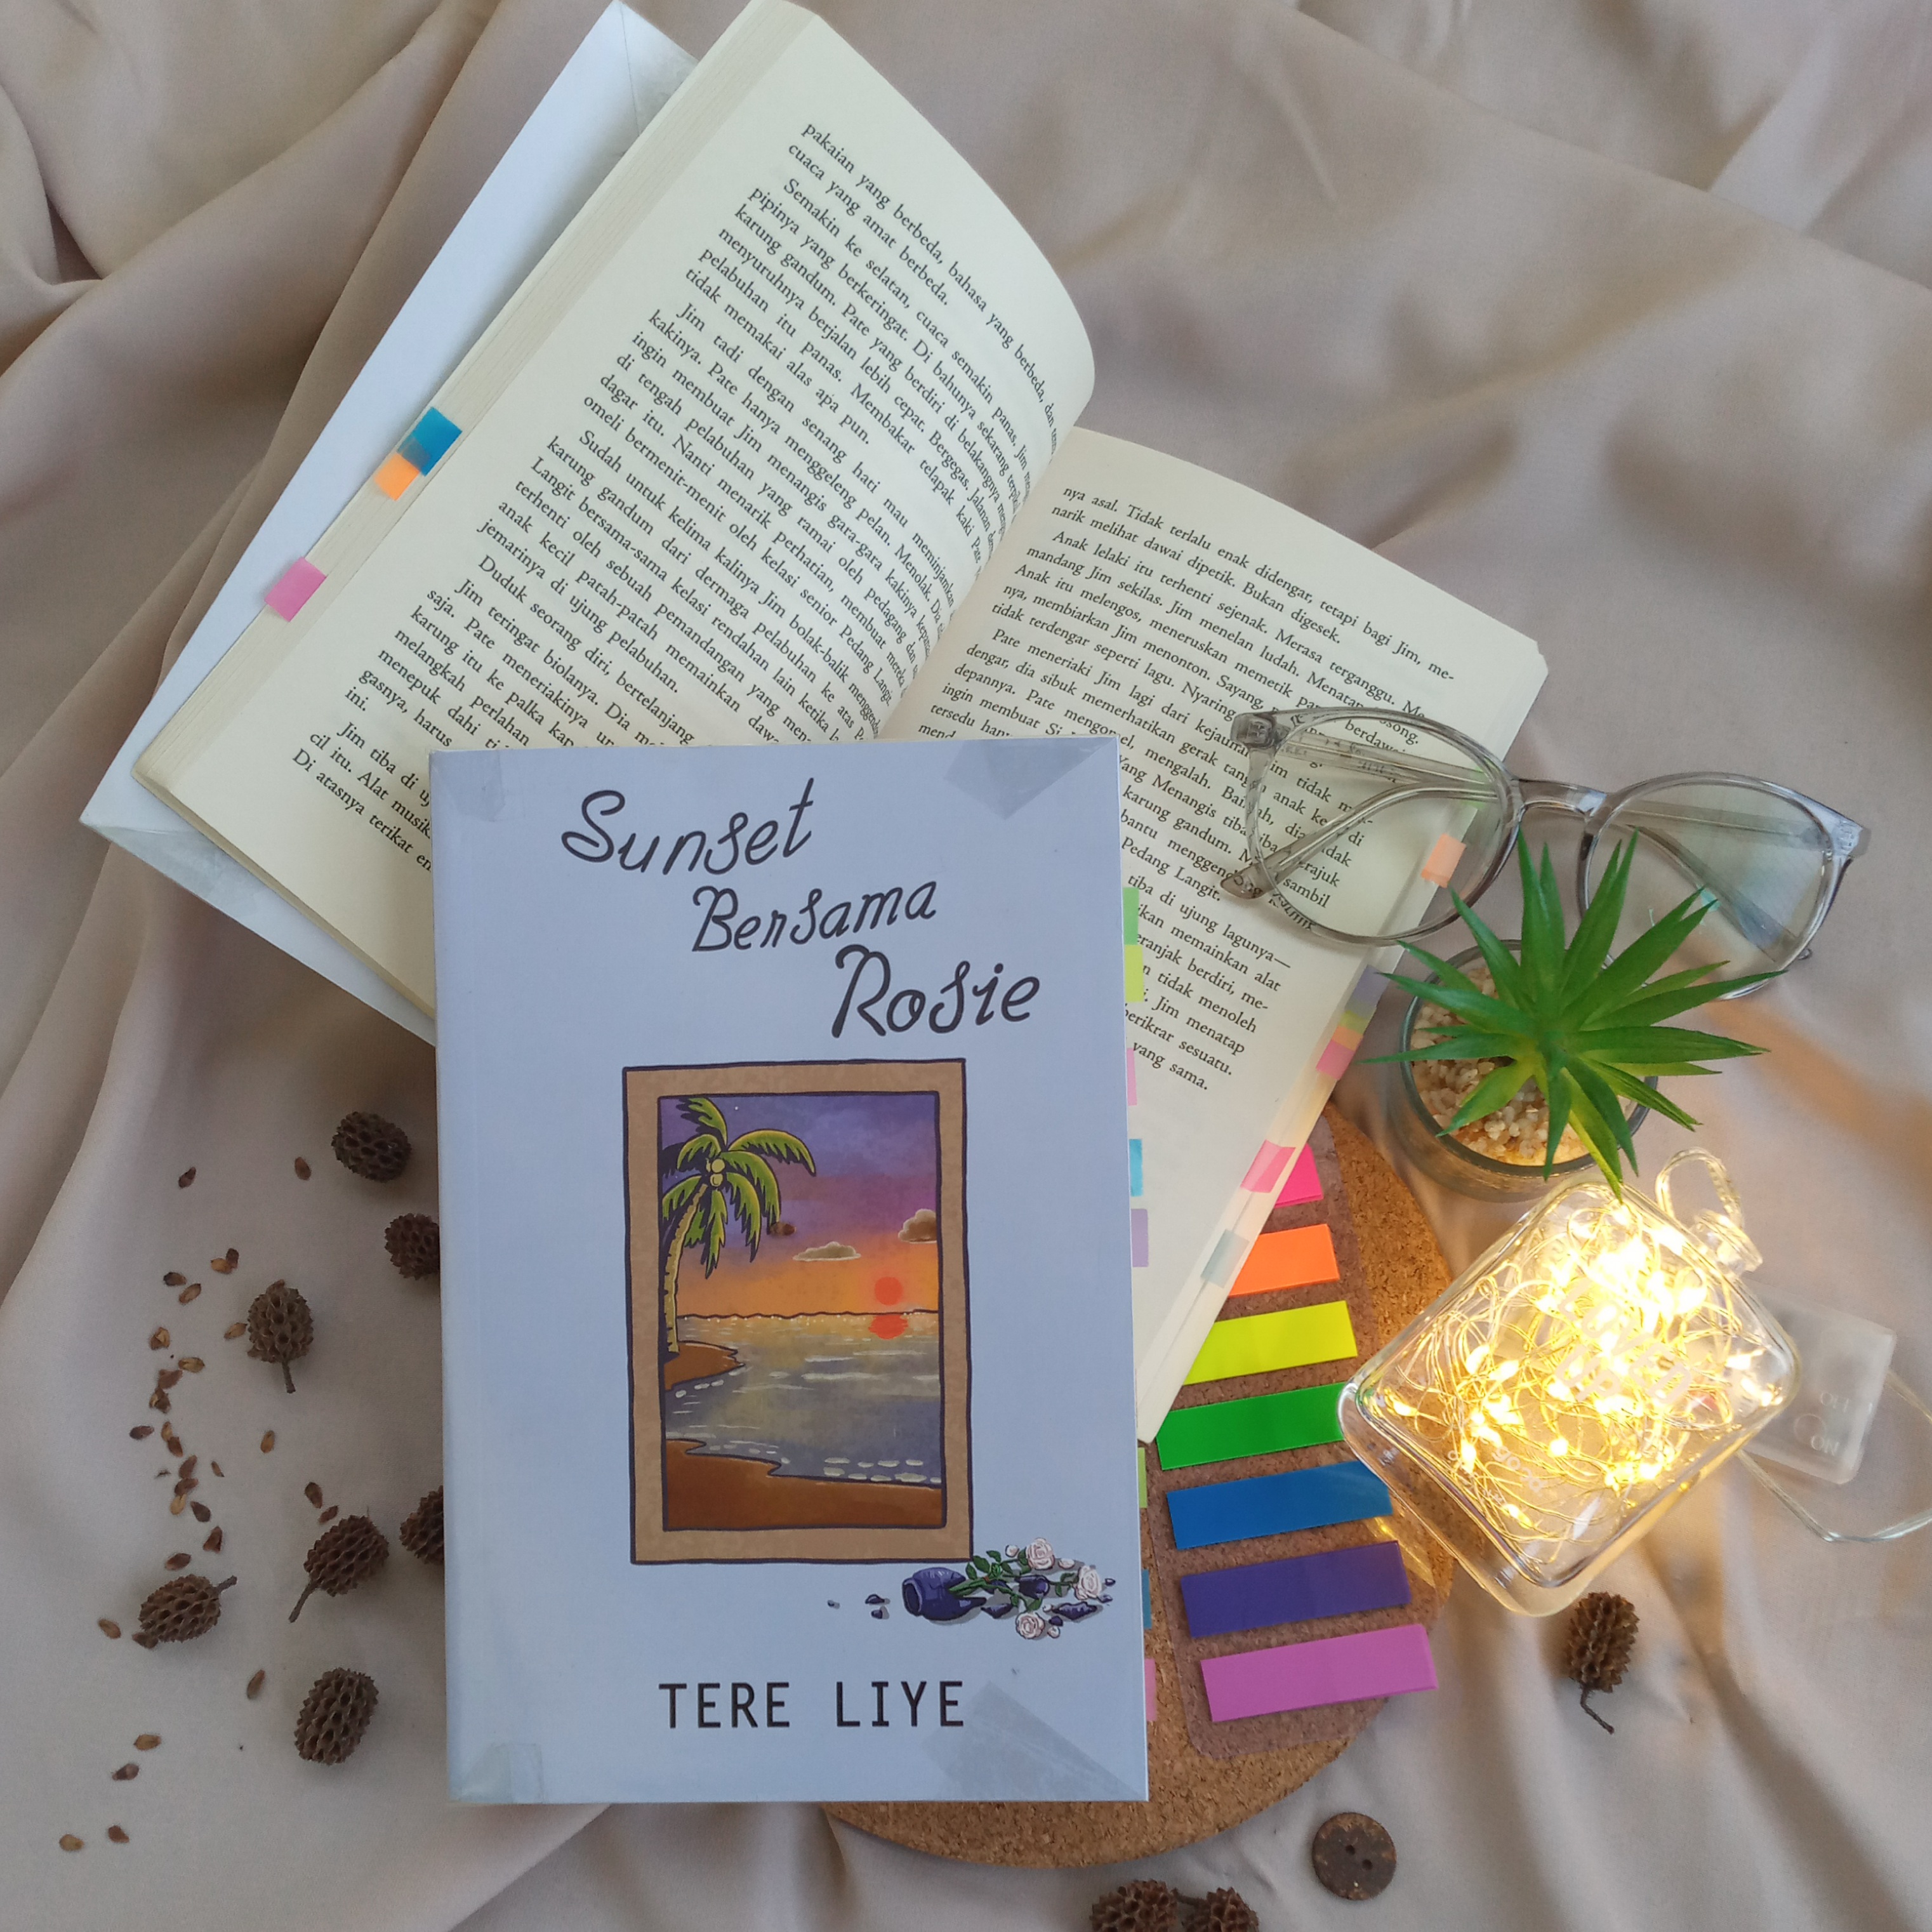 Review buku Novel "Sunset Bersama Rosie" karya Tere Liye Krasochnaya